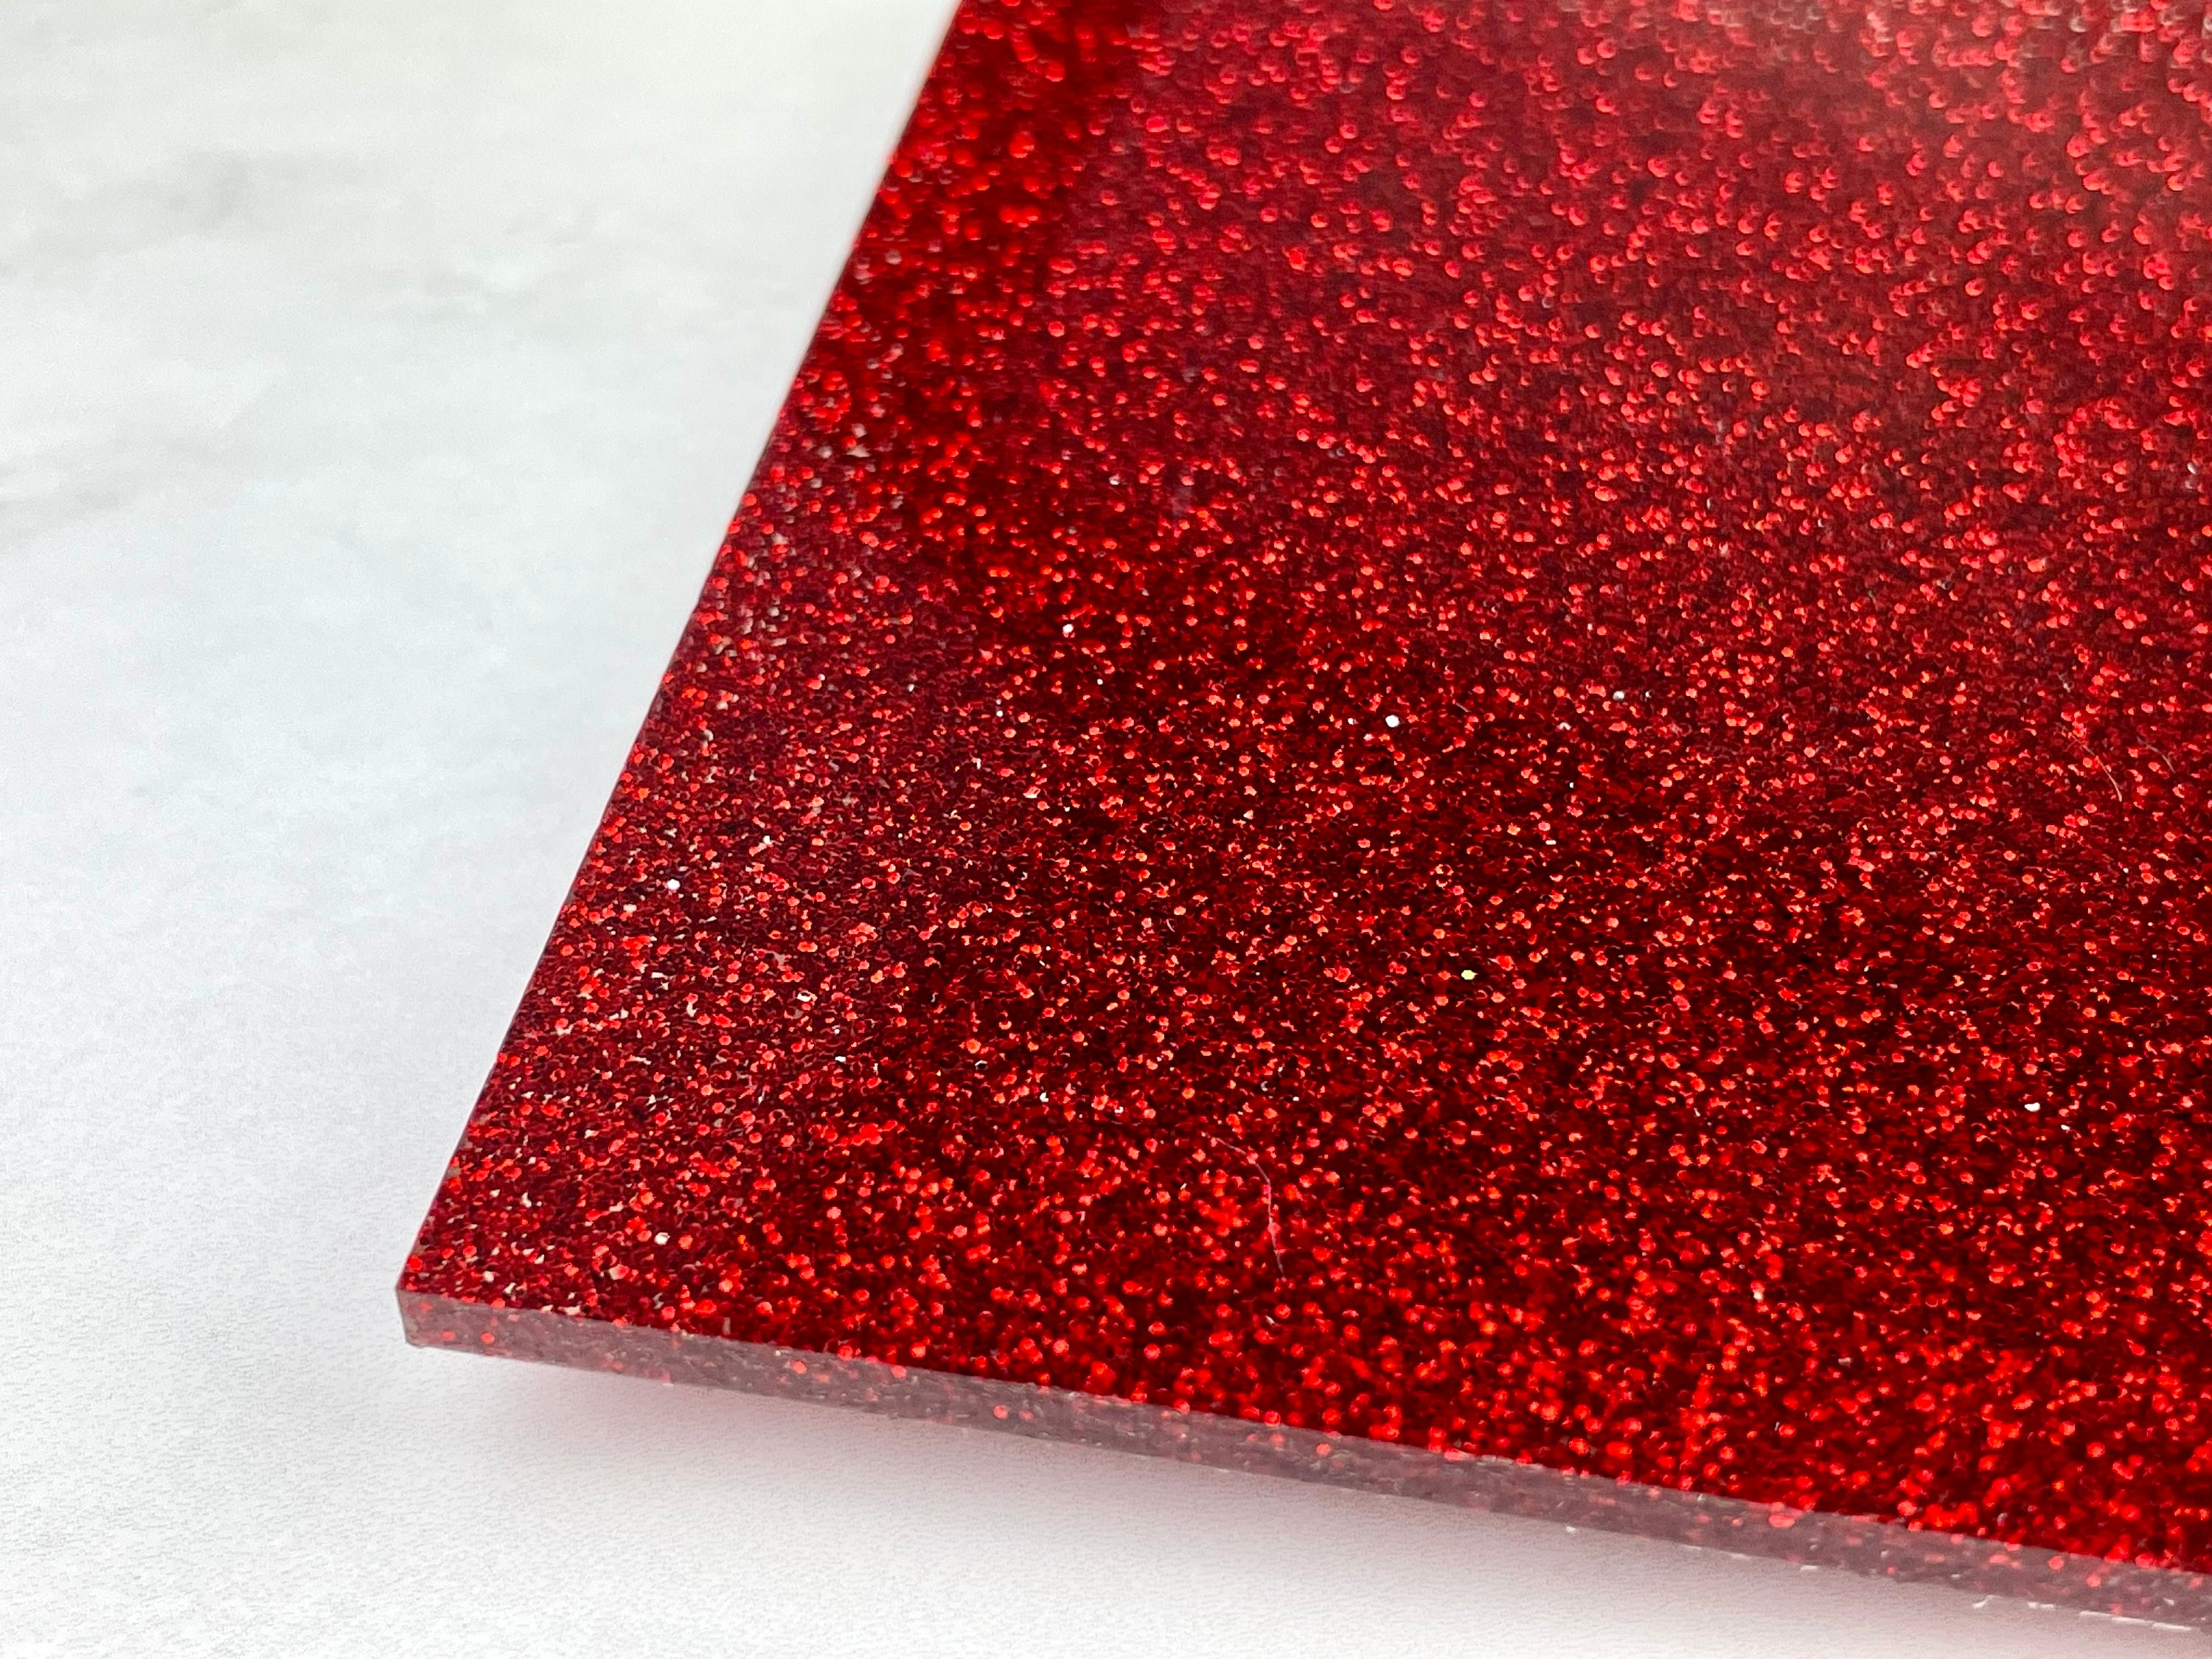 Hot Pink Glitter Confetti Plexiglass Acrylic Sheet for Laser Cutting –  AcrylicMeThat